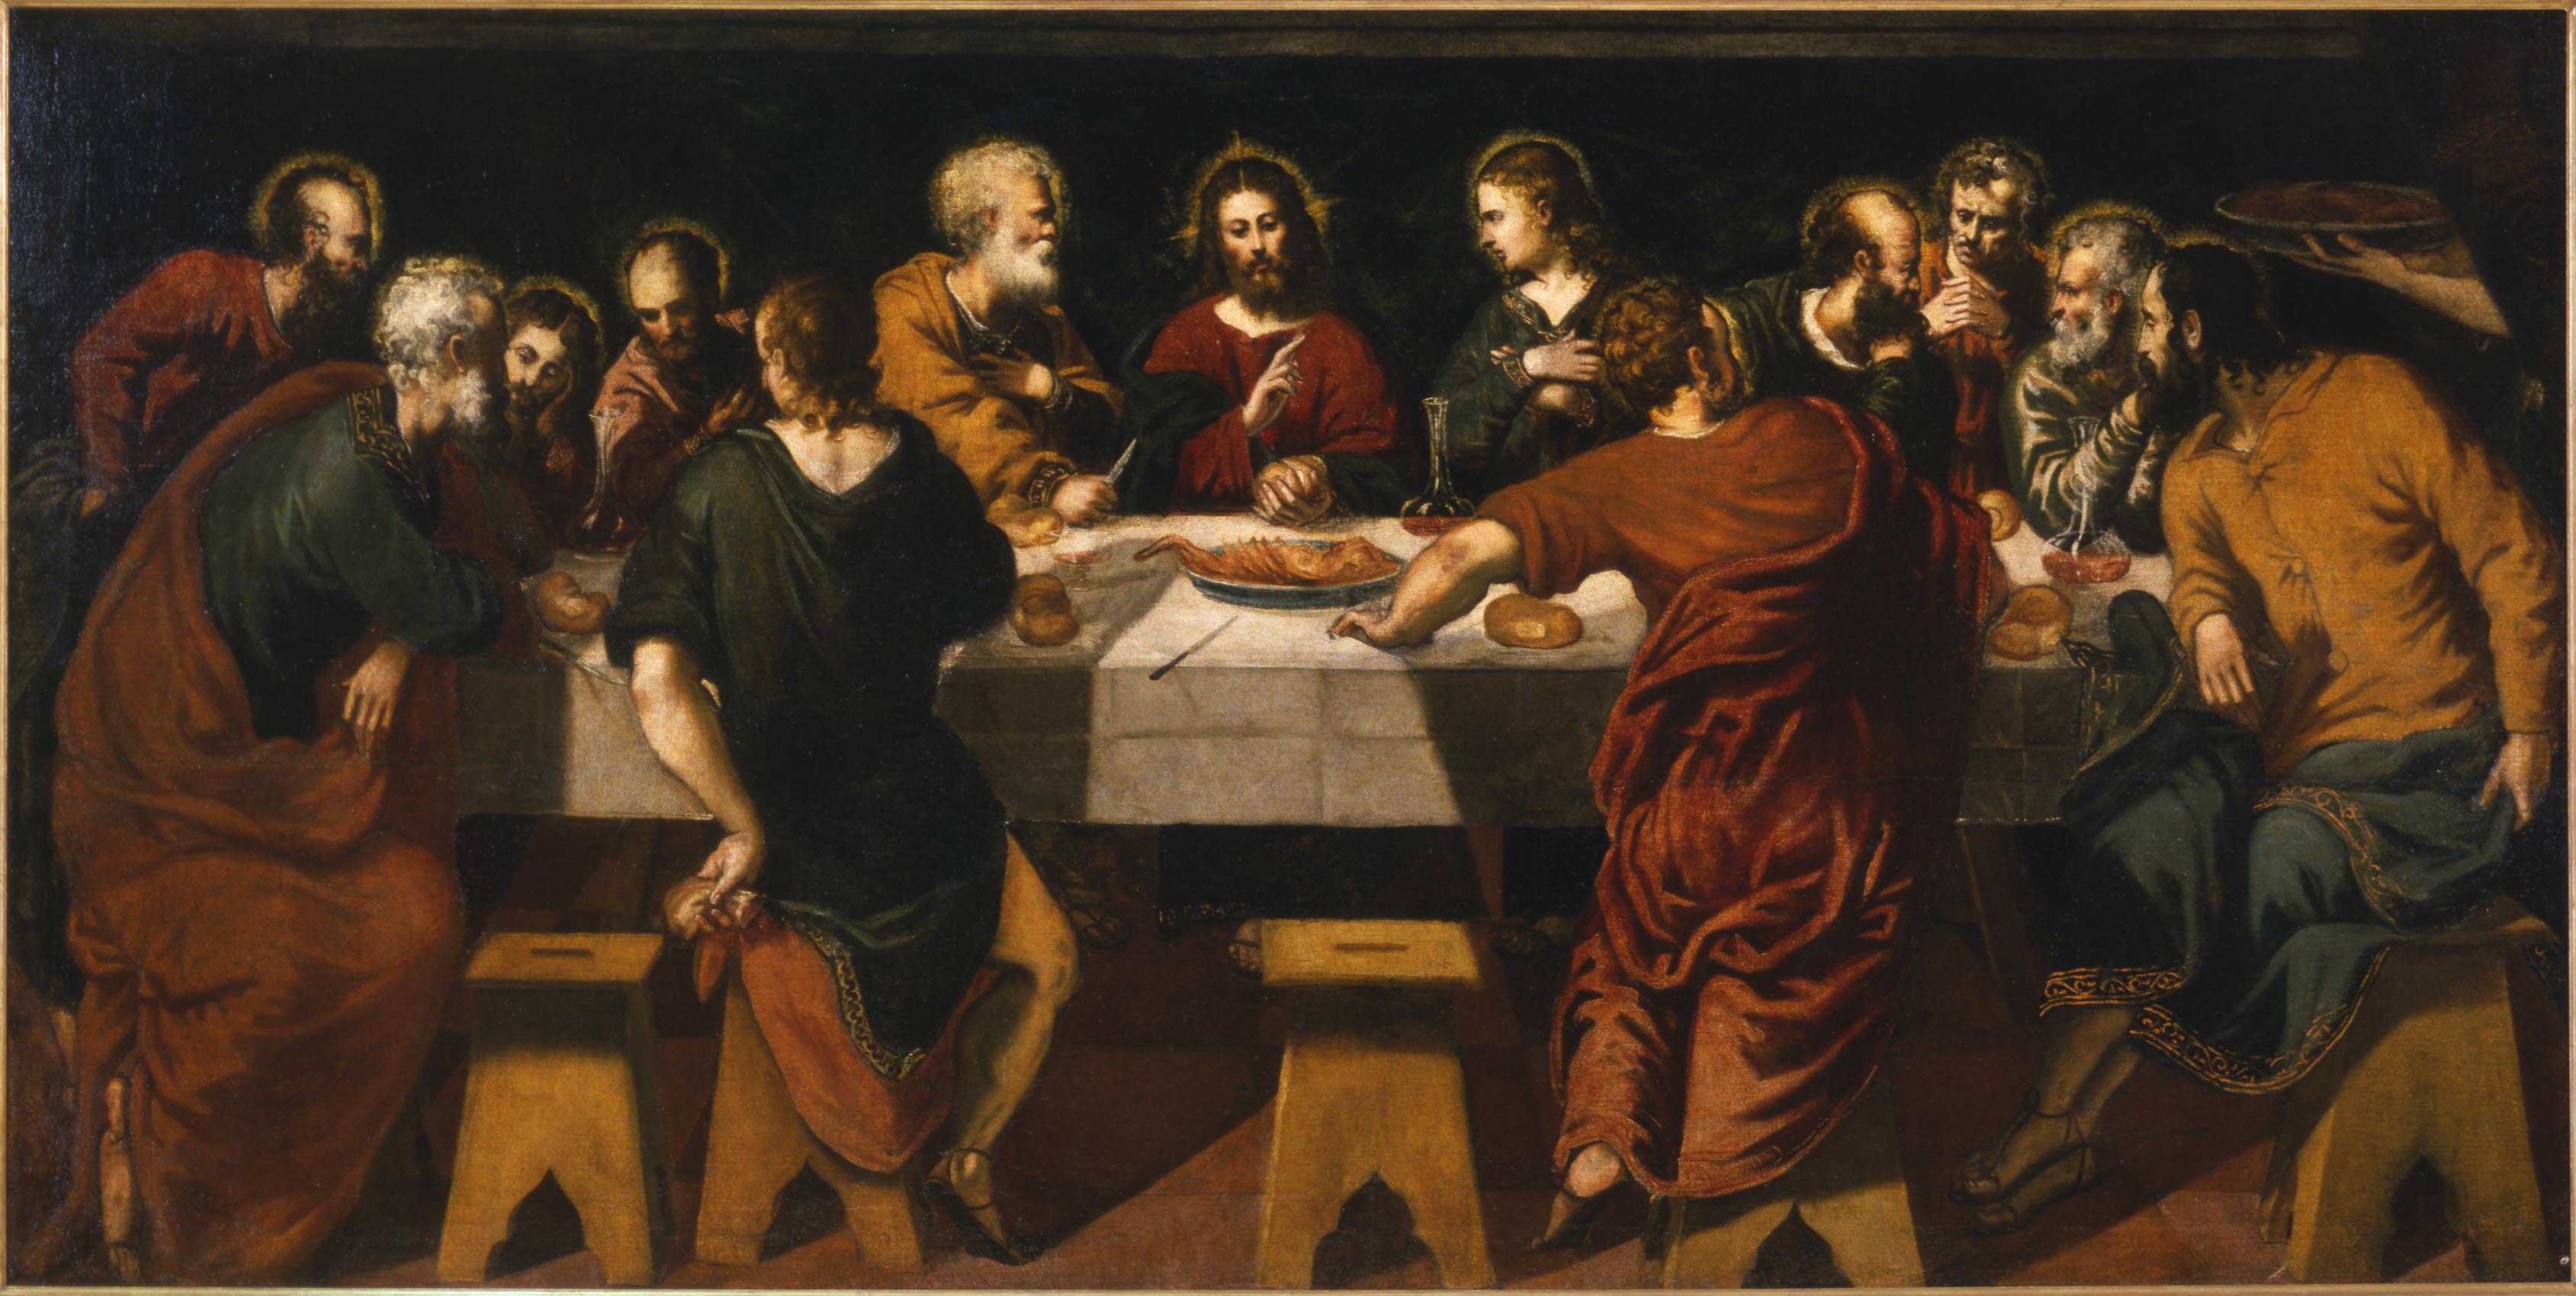 Tintoretto, Jacopo Comin de) - La Santa Cena